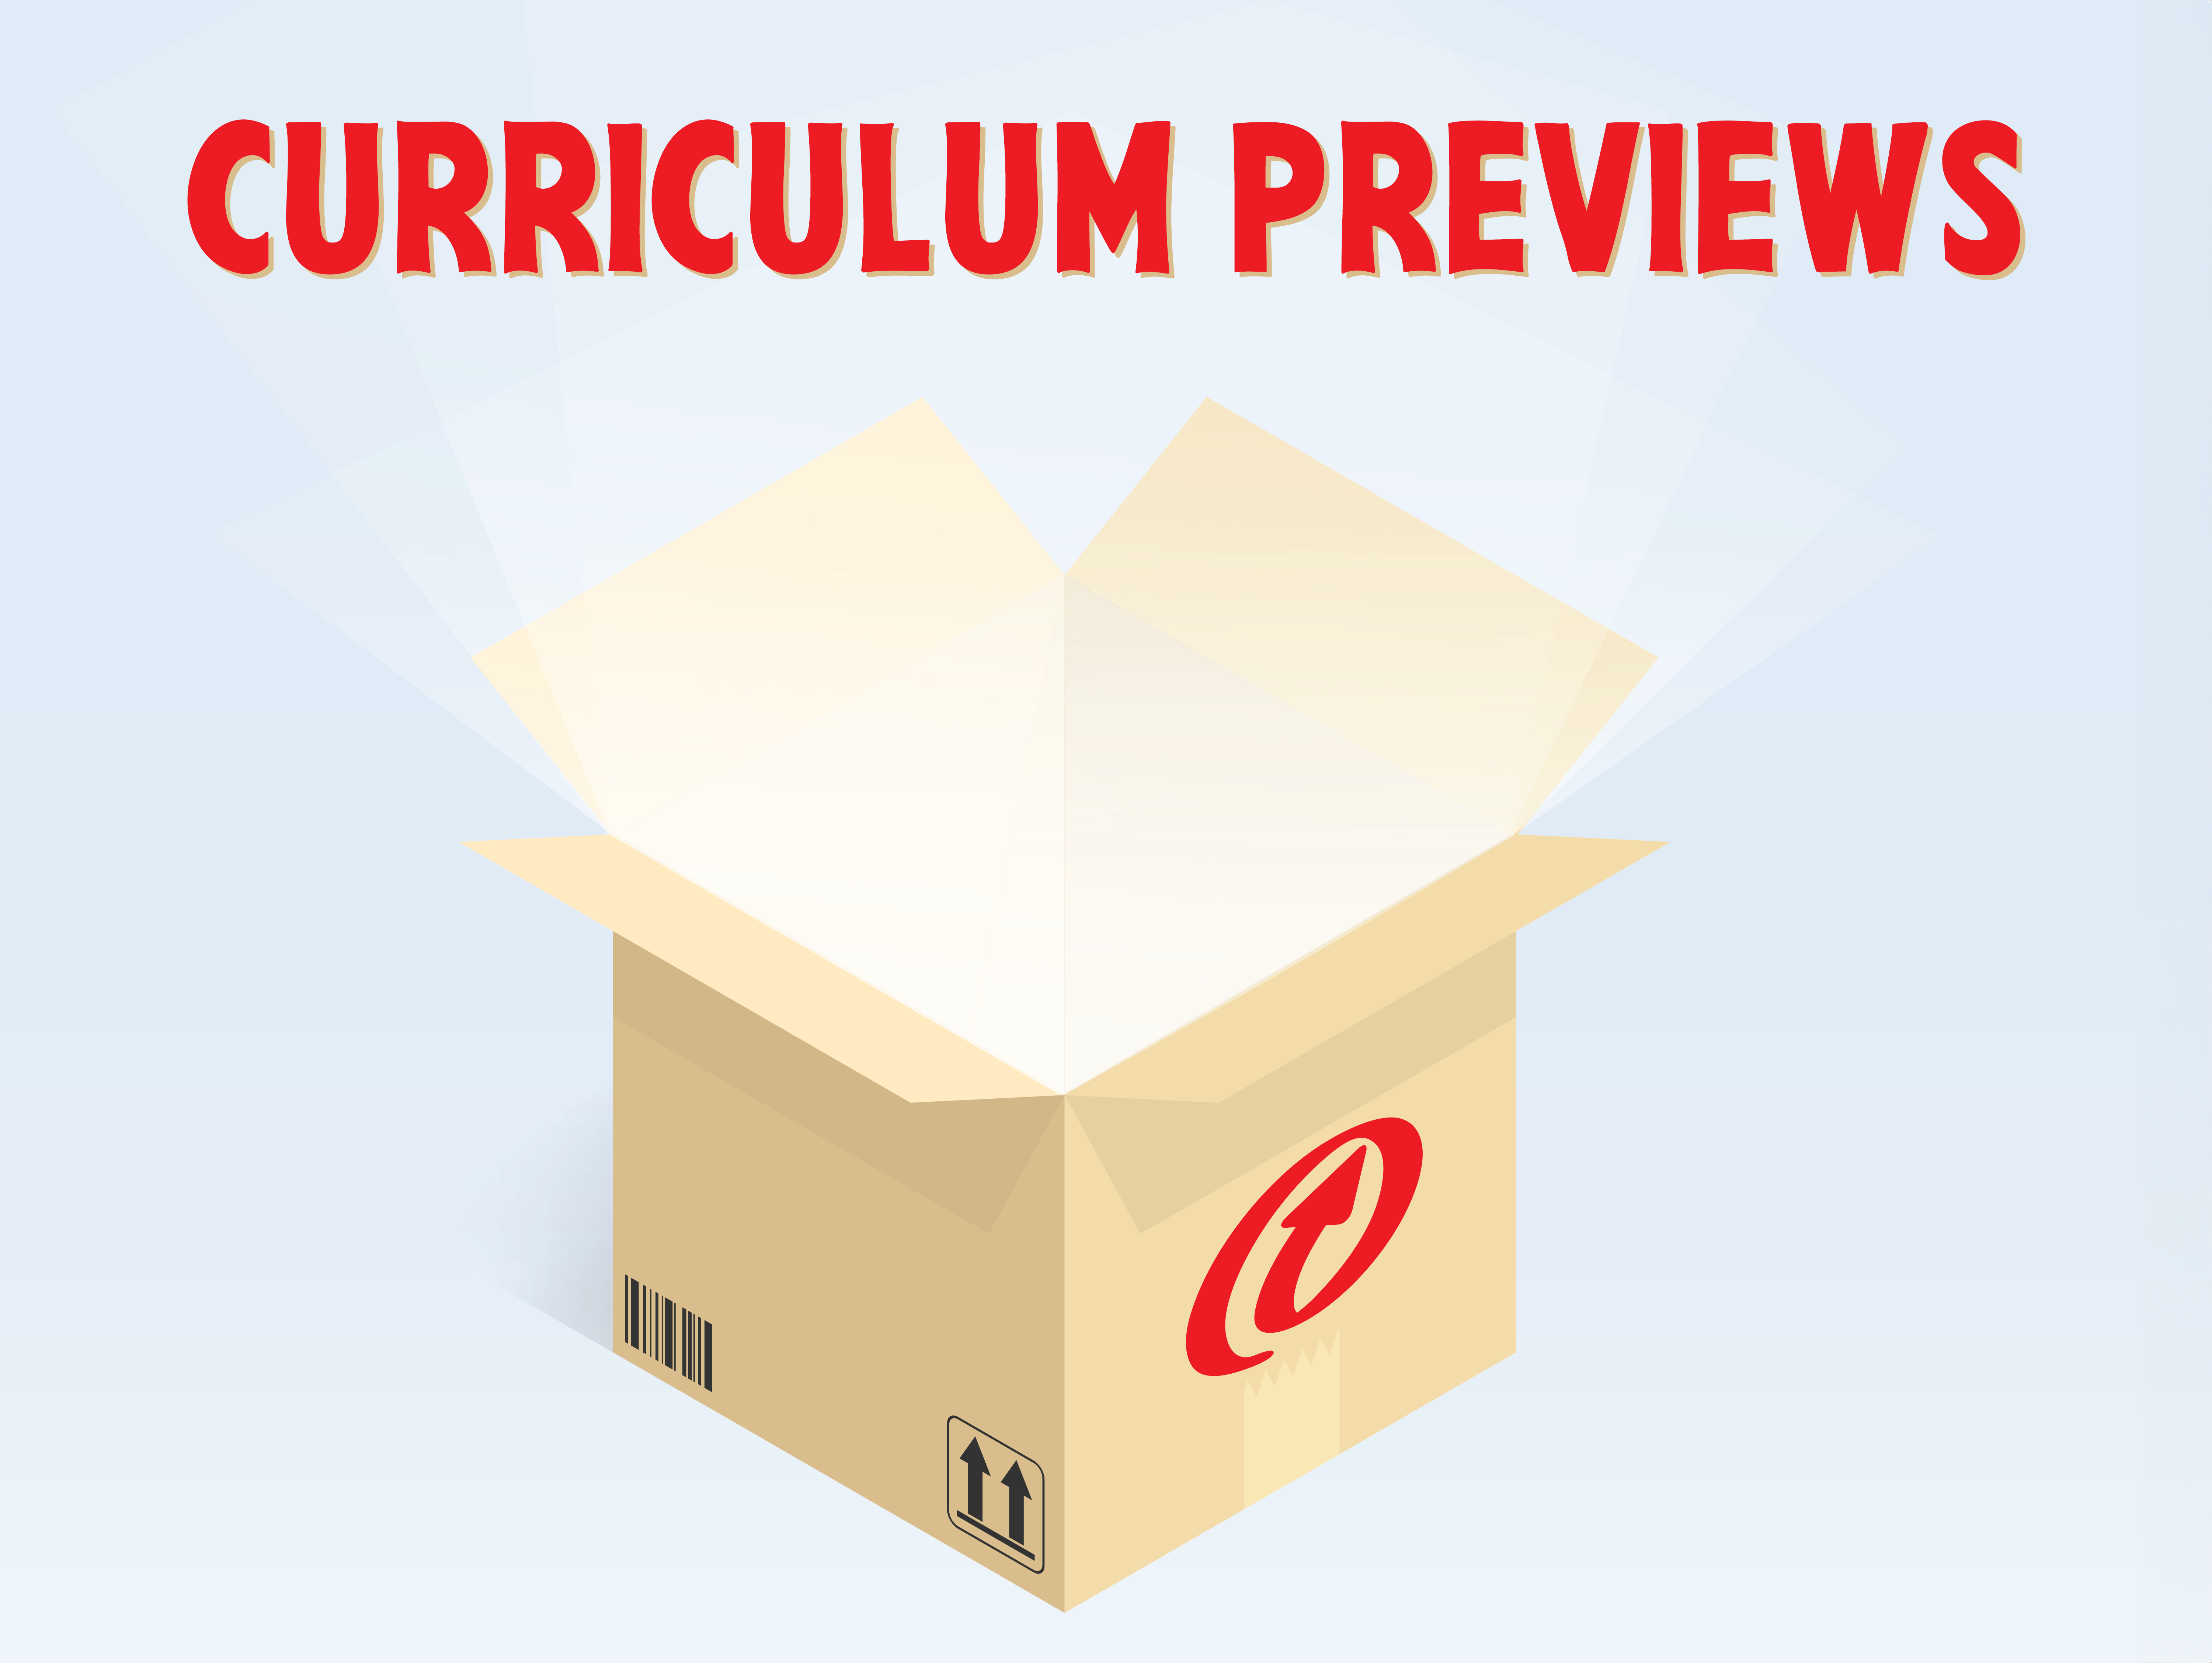 How Do Curriculum Previews Work?